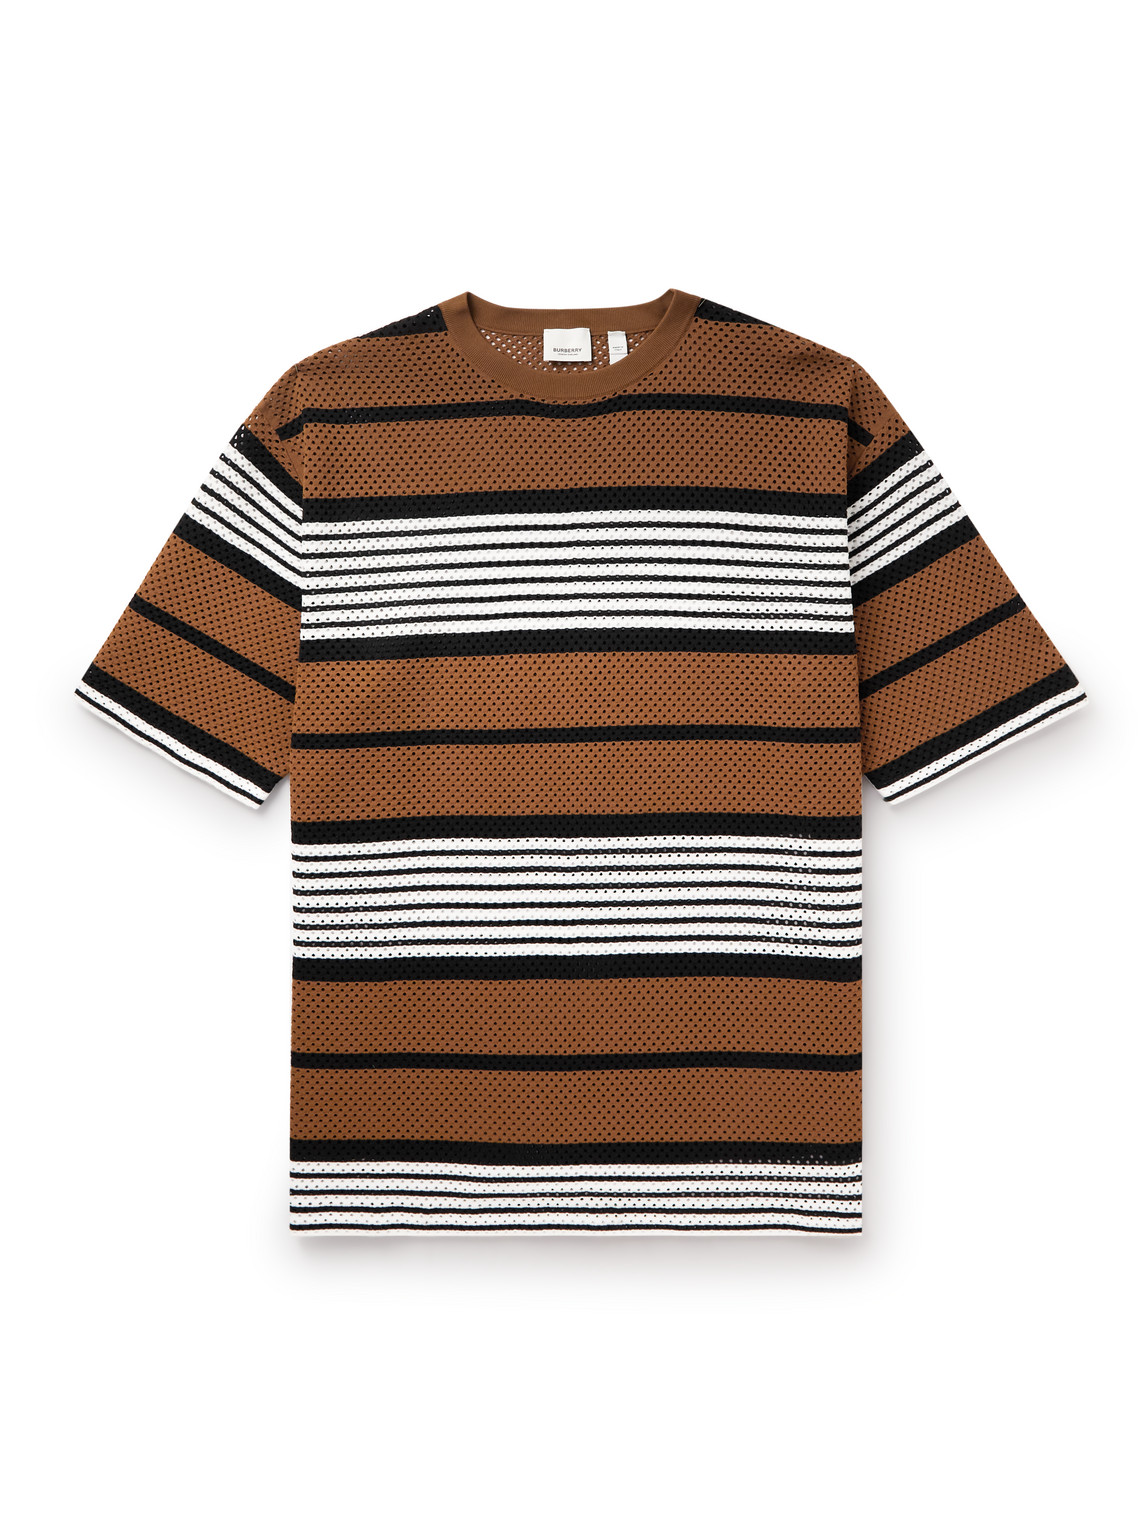 Burberry - Striped Mesh T-Shirt - Men - Brown - L von Burberry